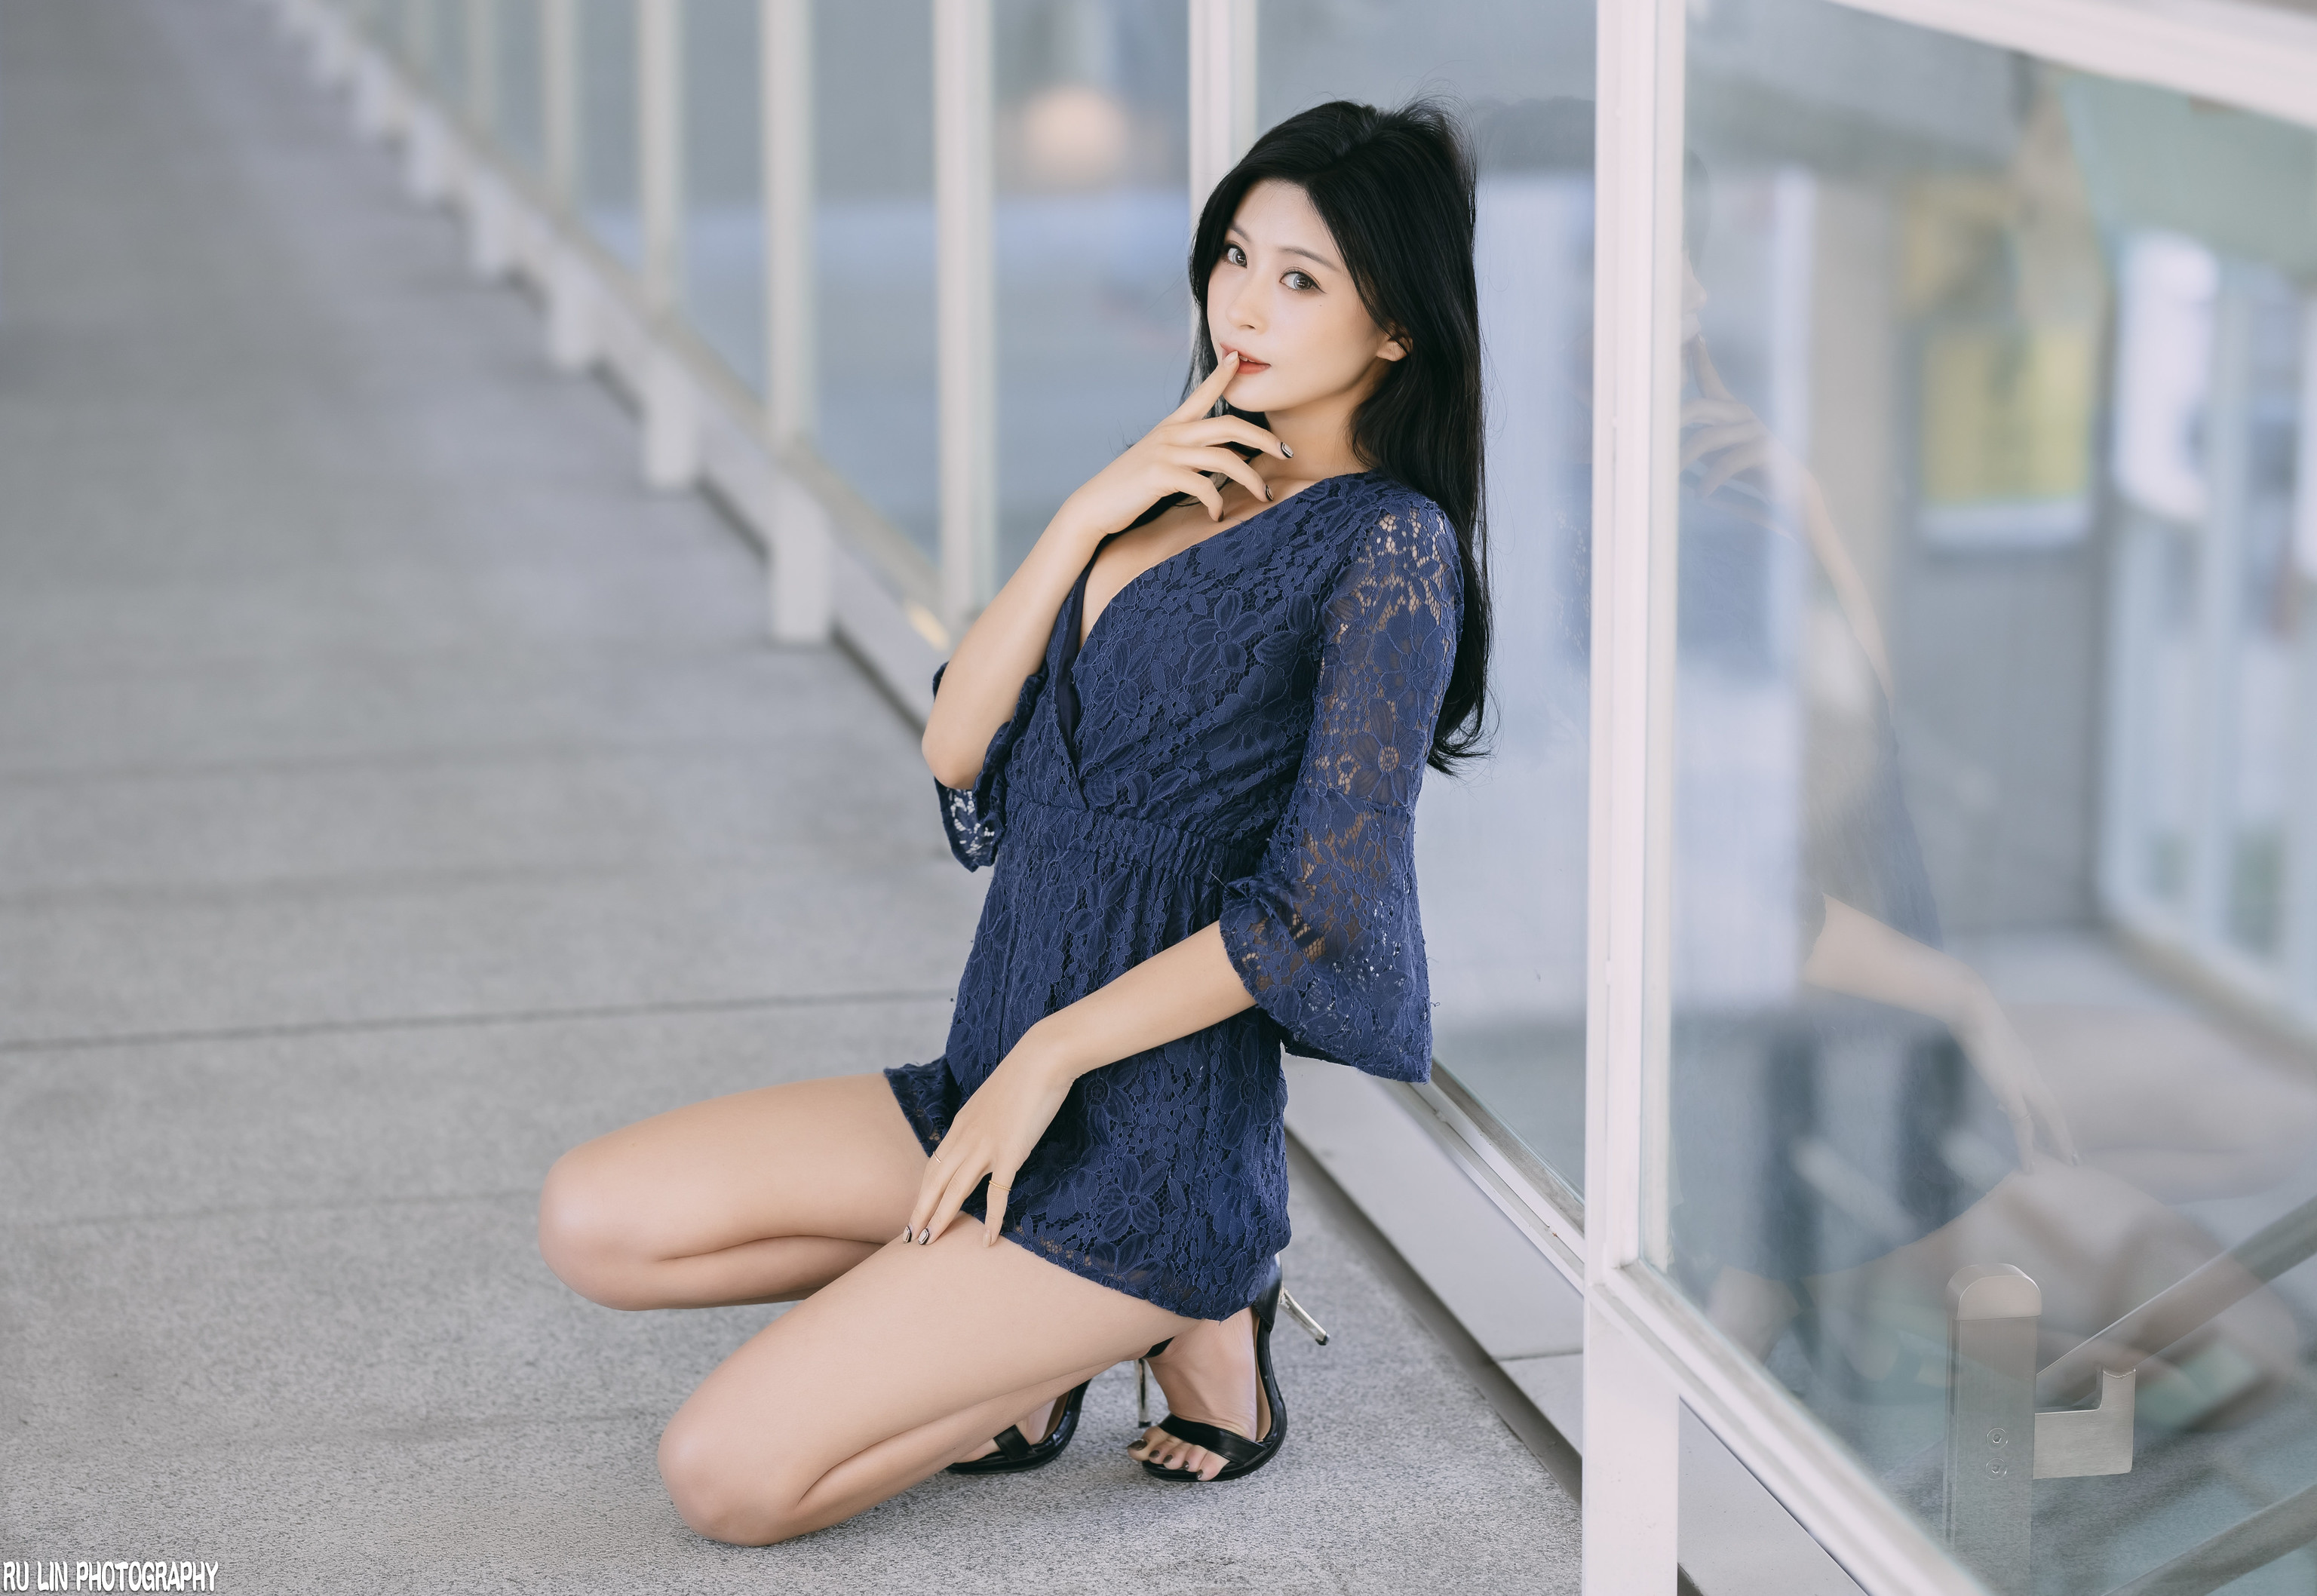 Women PinQ Asian Dark Hair Finger On Lips Blue Clothing Window Reflection Legs Blue Dress 3072x2116